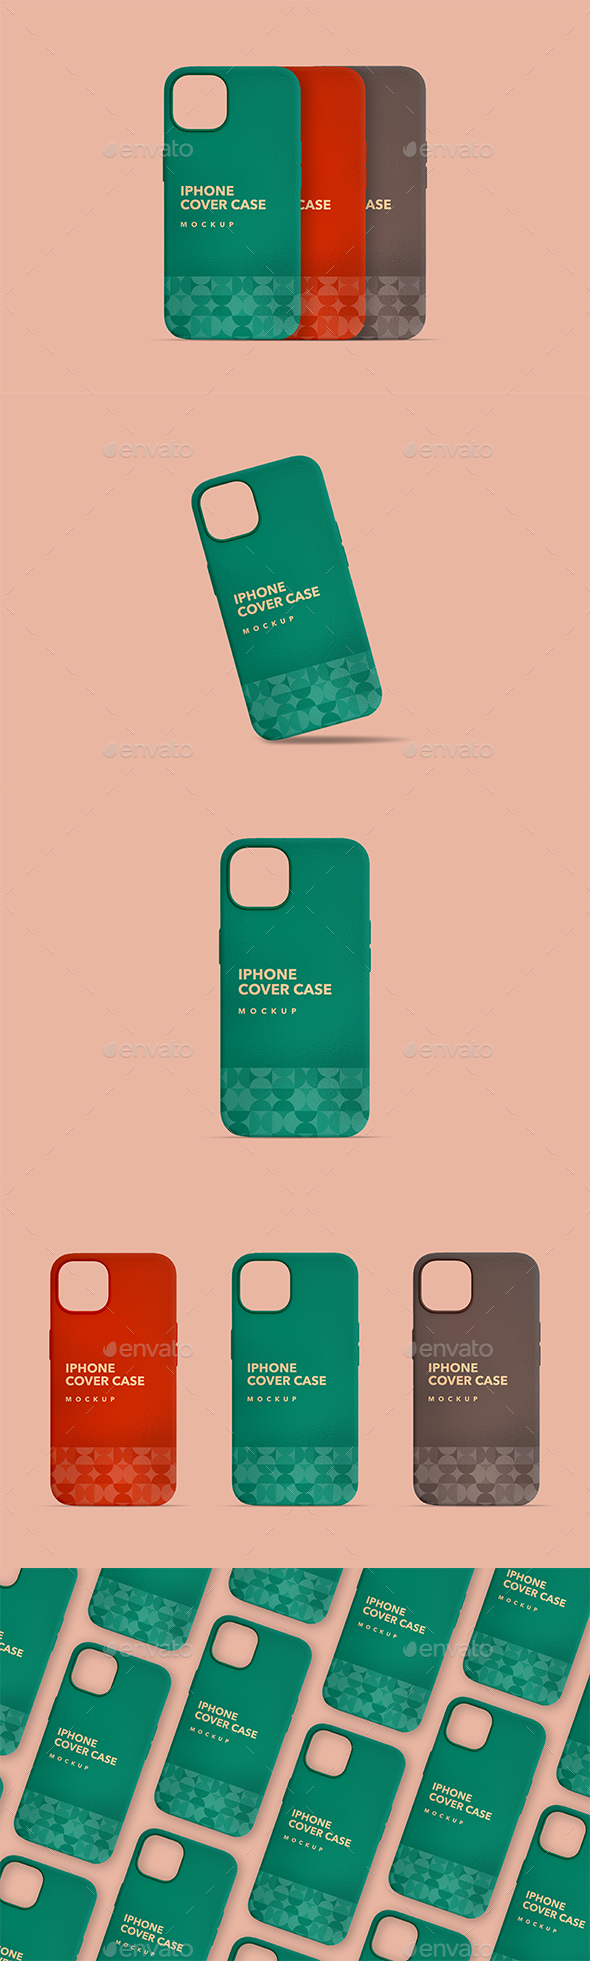 Iphone Case Mockup